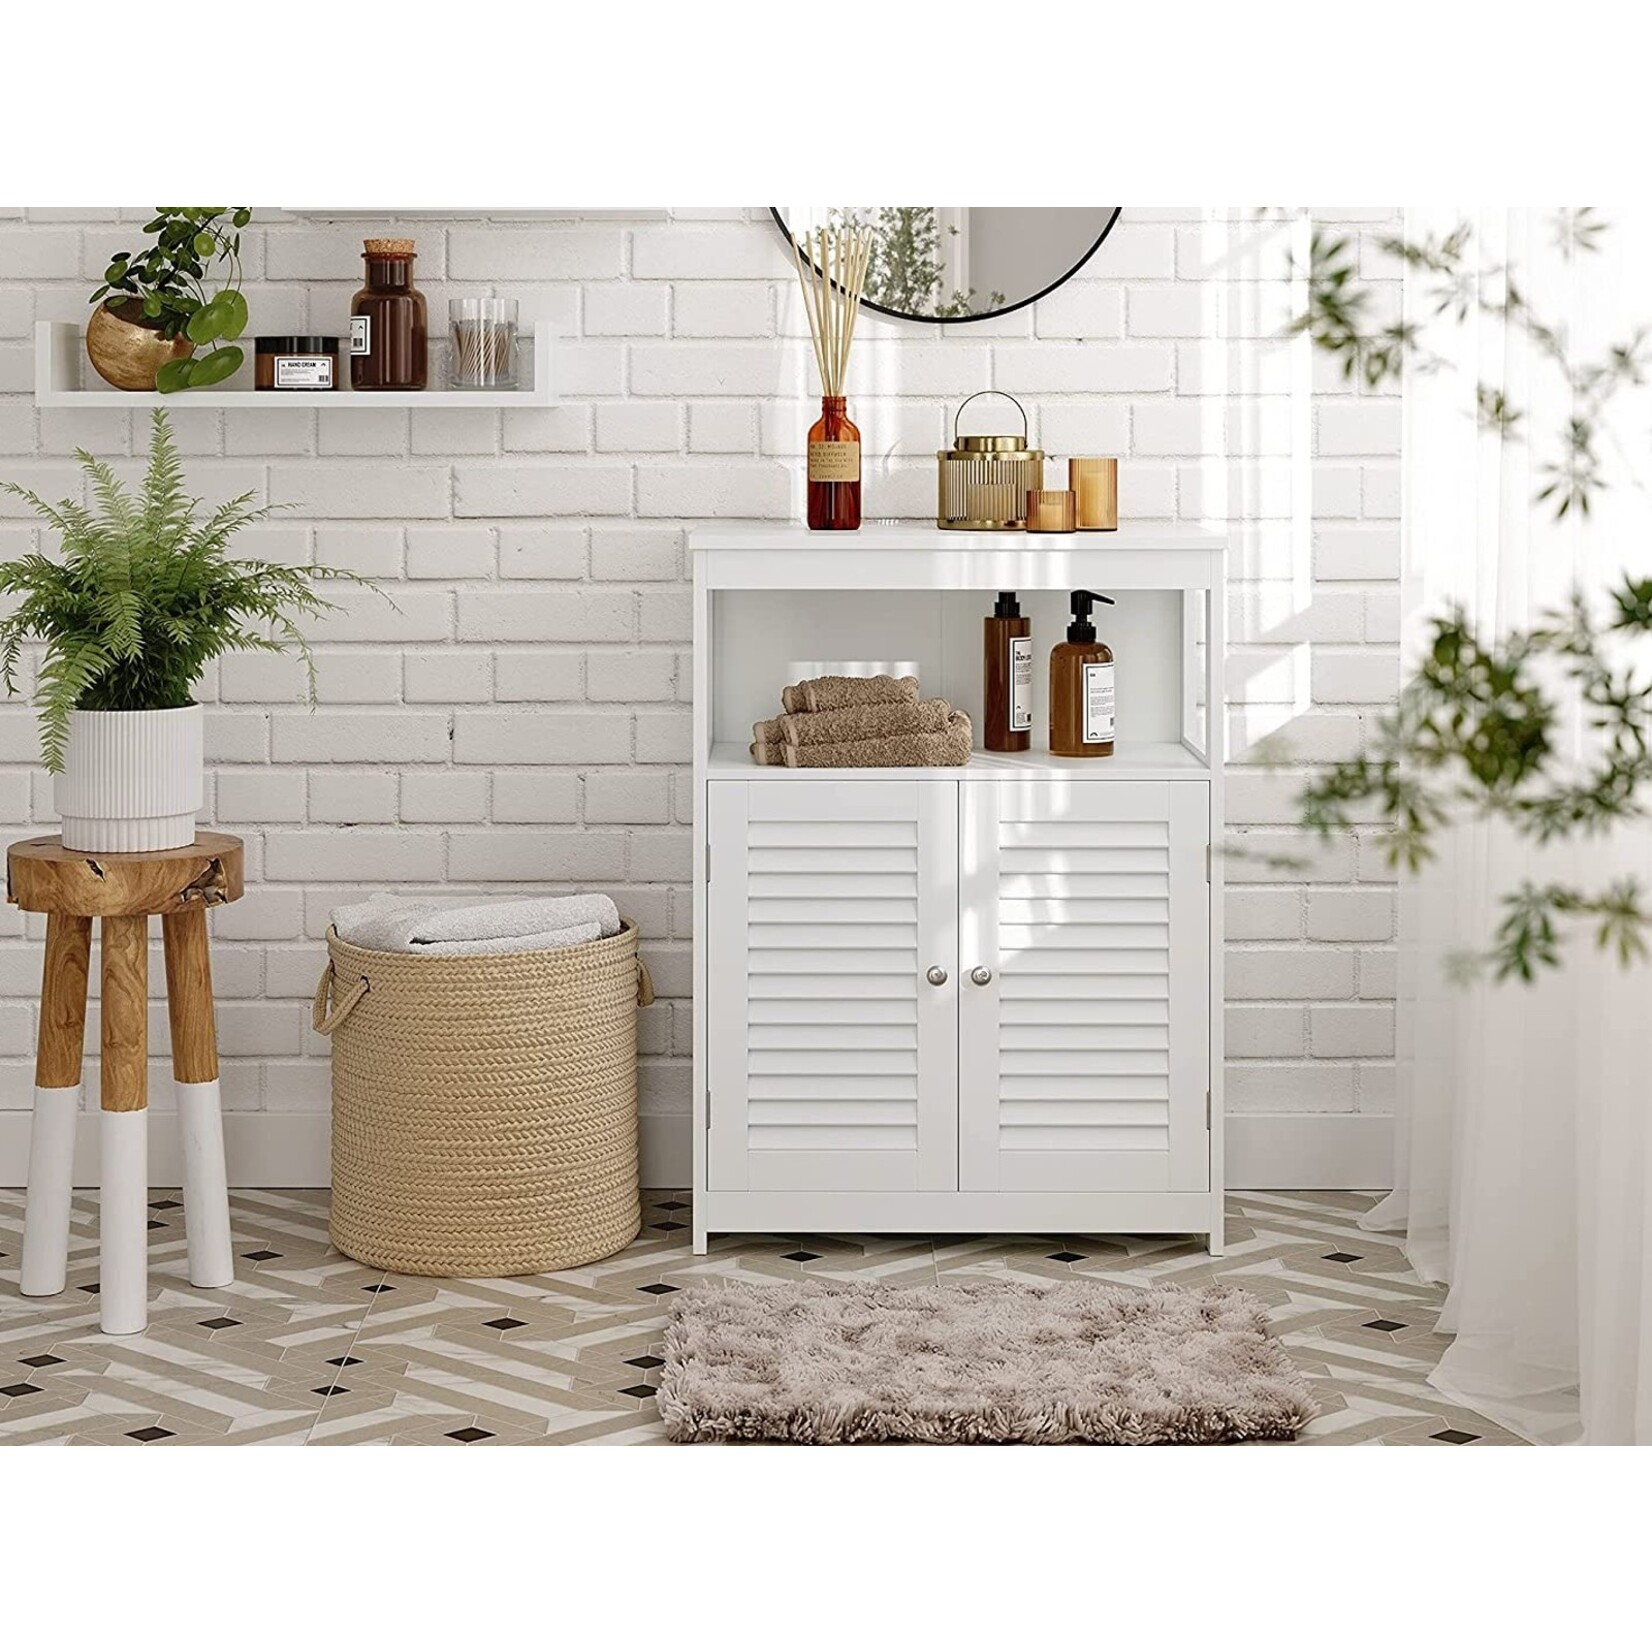 Parya Home Parya Home - Bathroom cabinet - Free standing cabinet - 2 Doors - Wood - White